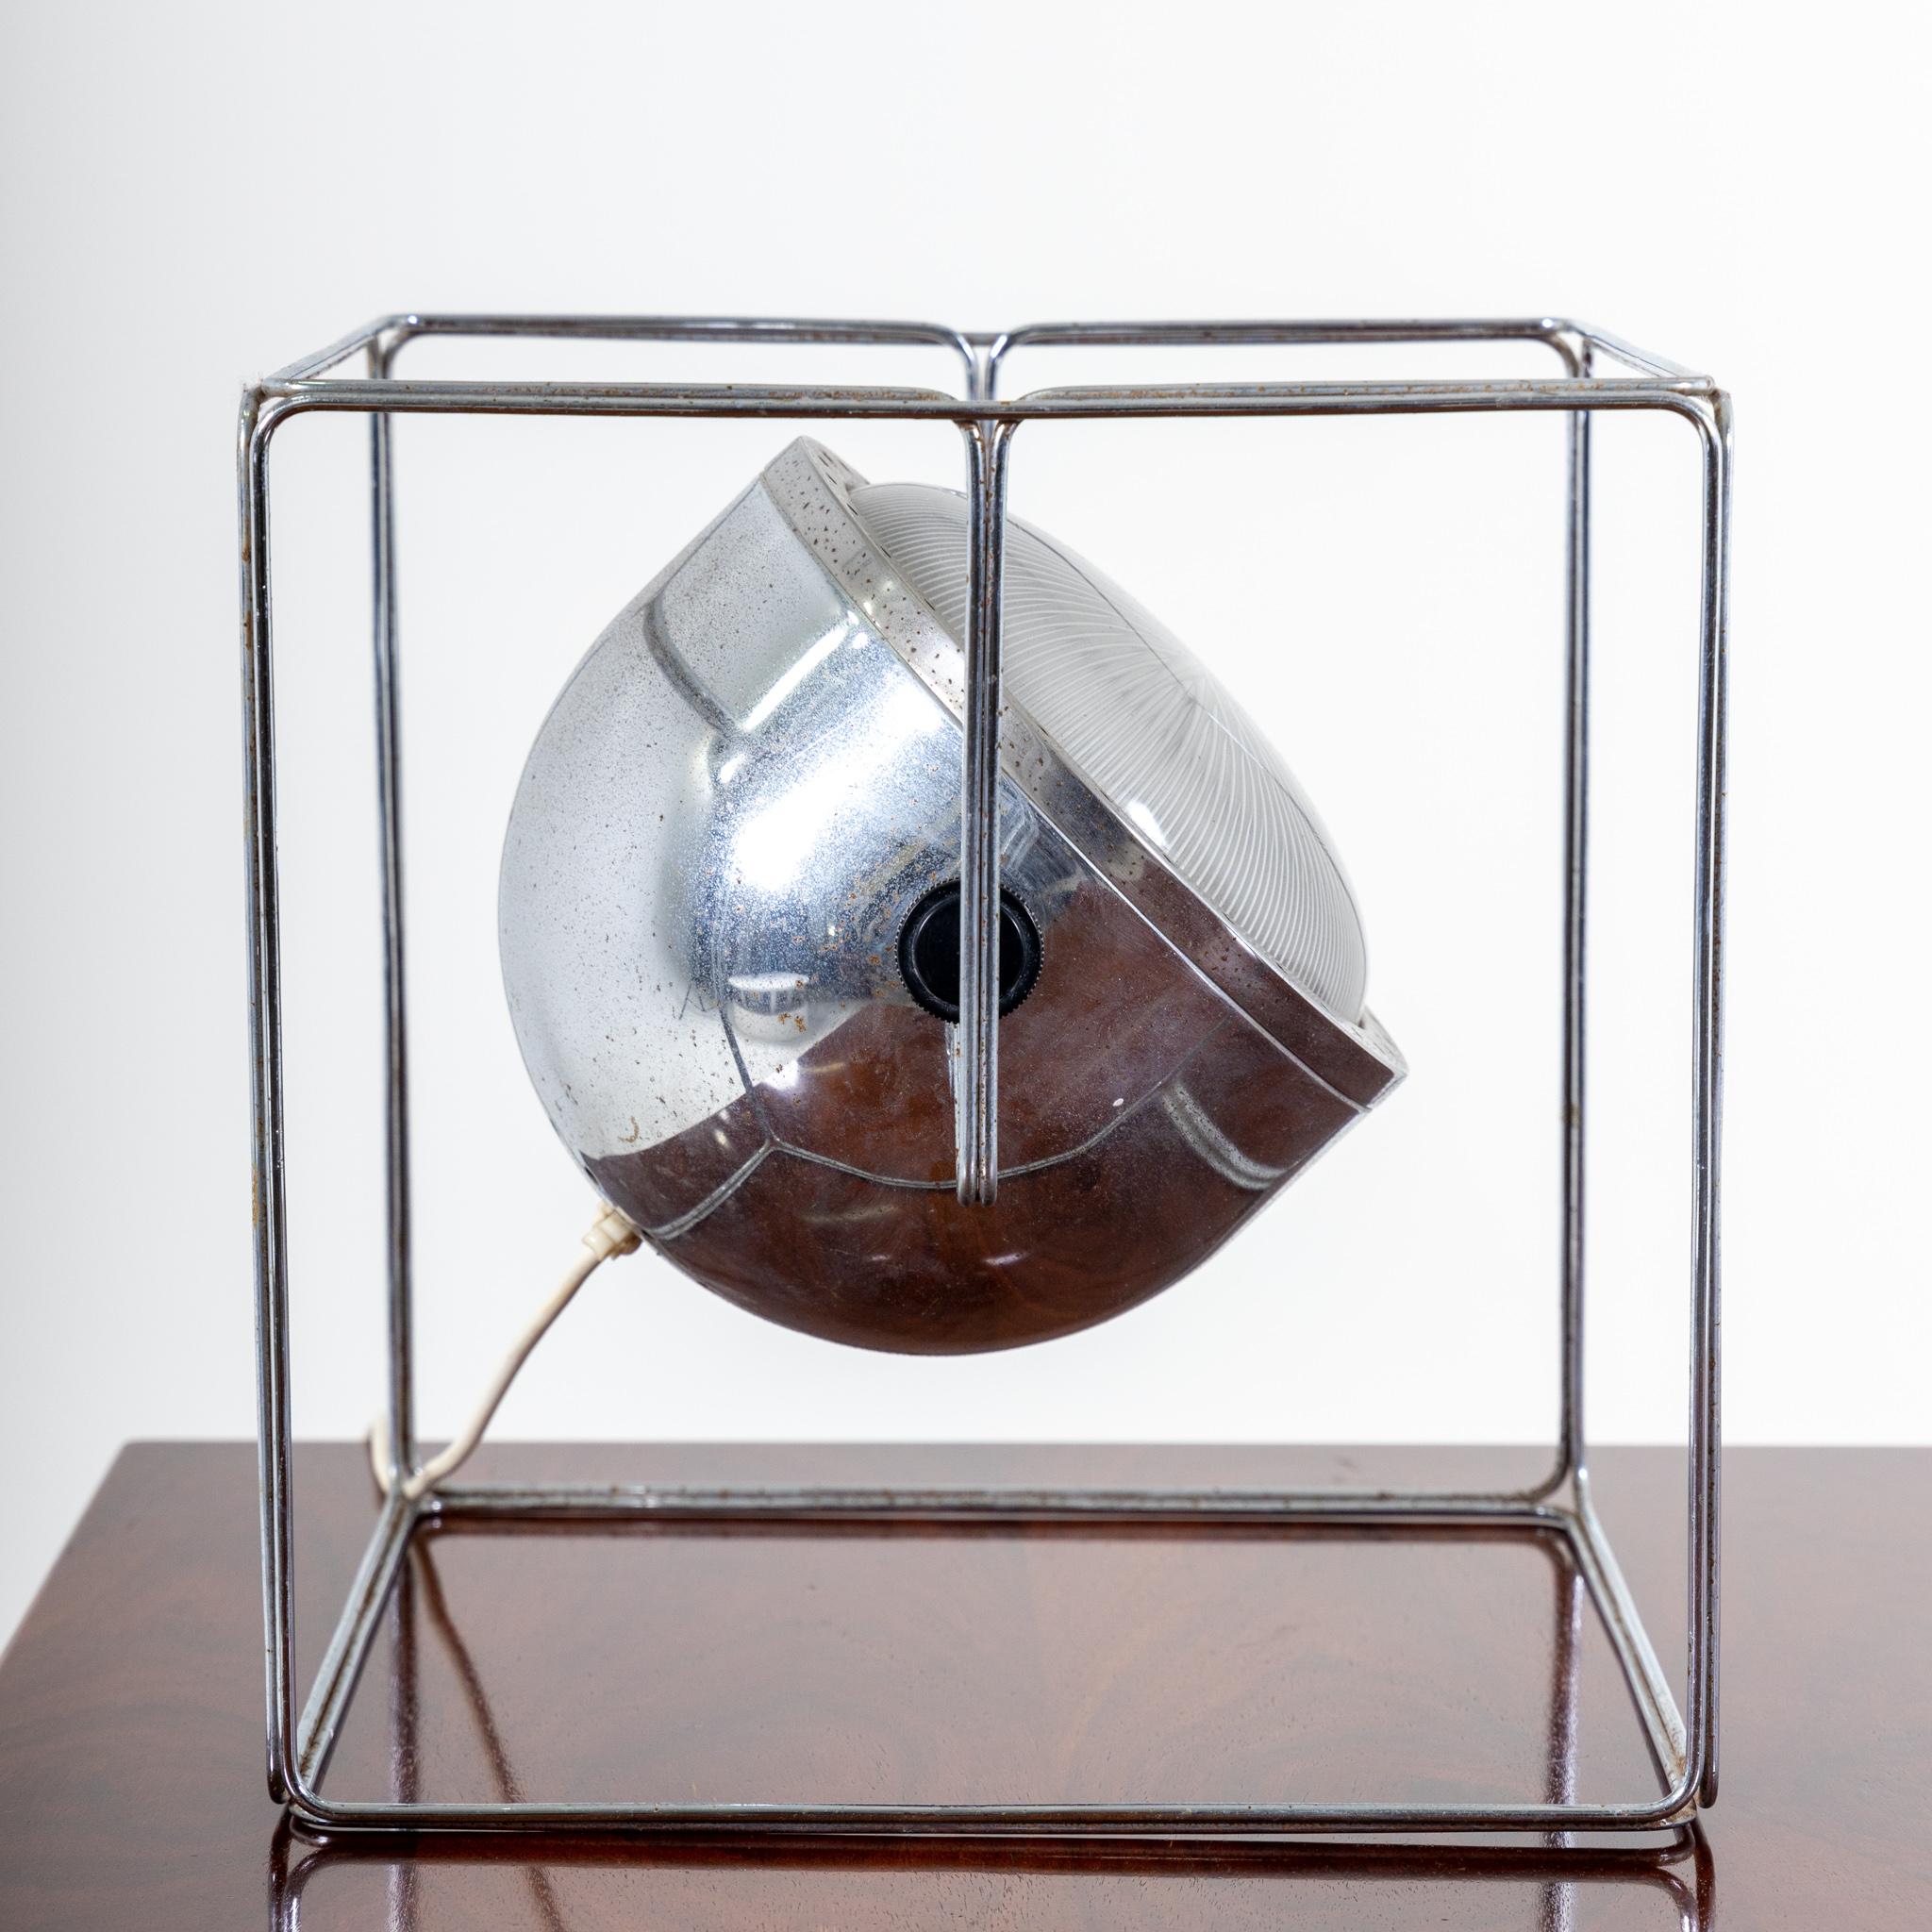 Headlight shaped Metal Table Lamp, Italian Design, Mid-20th Century For Sale 1